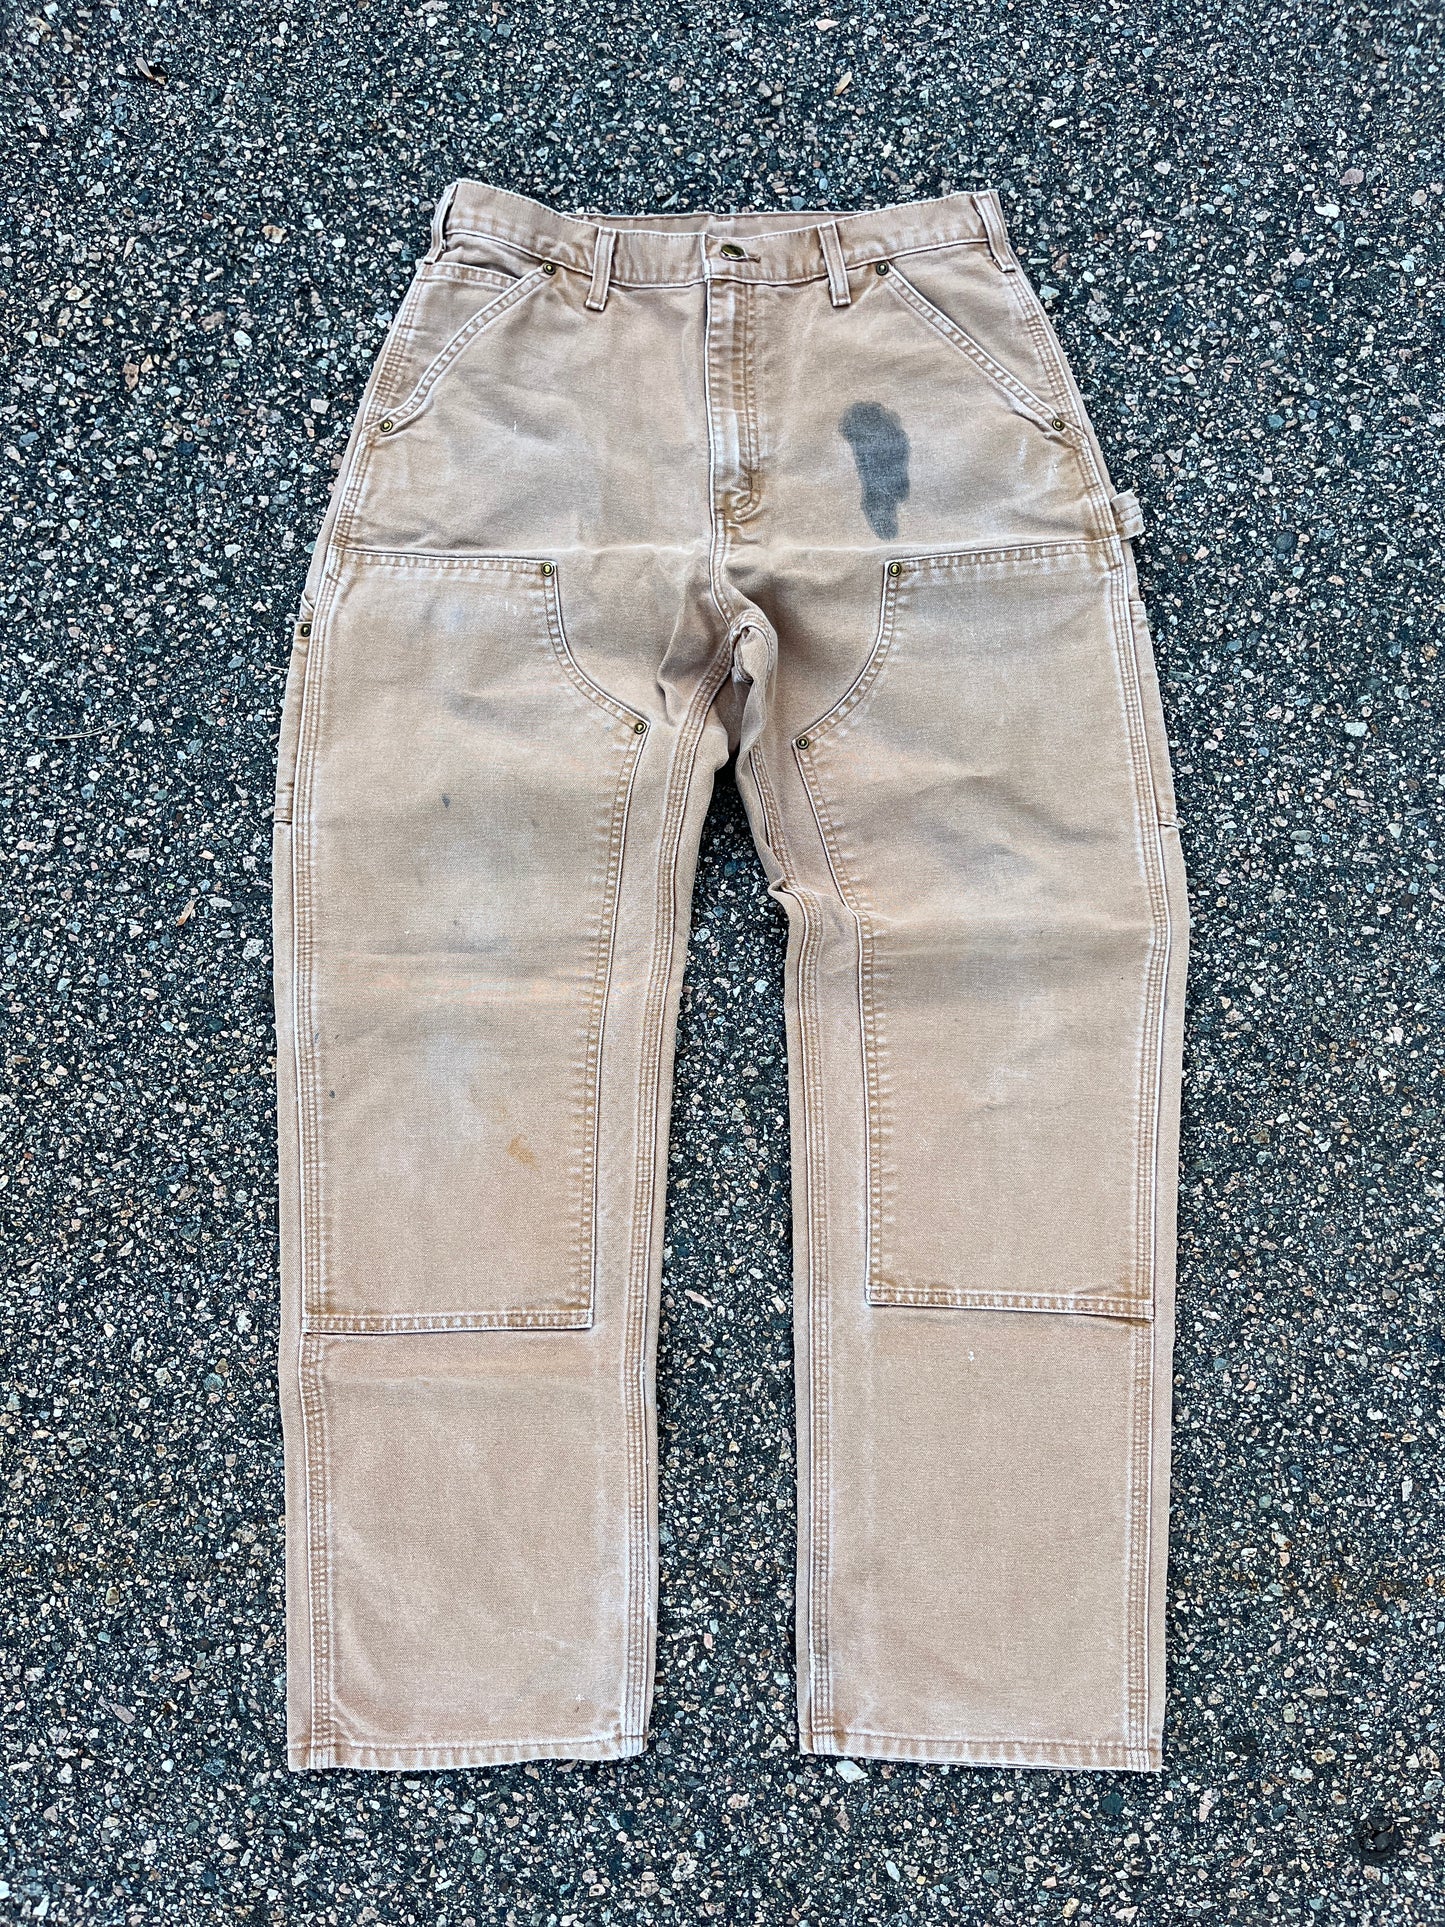 Faded Tan Carhartt Double Knee Pants - 31 x 31